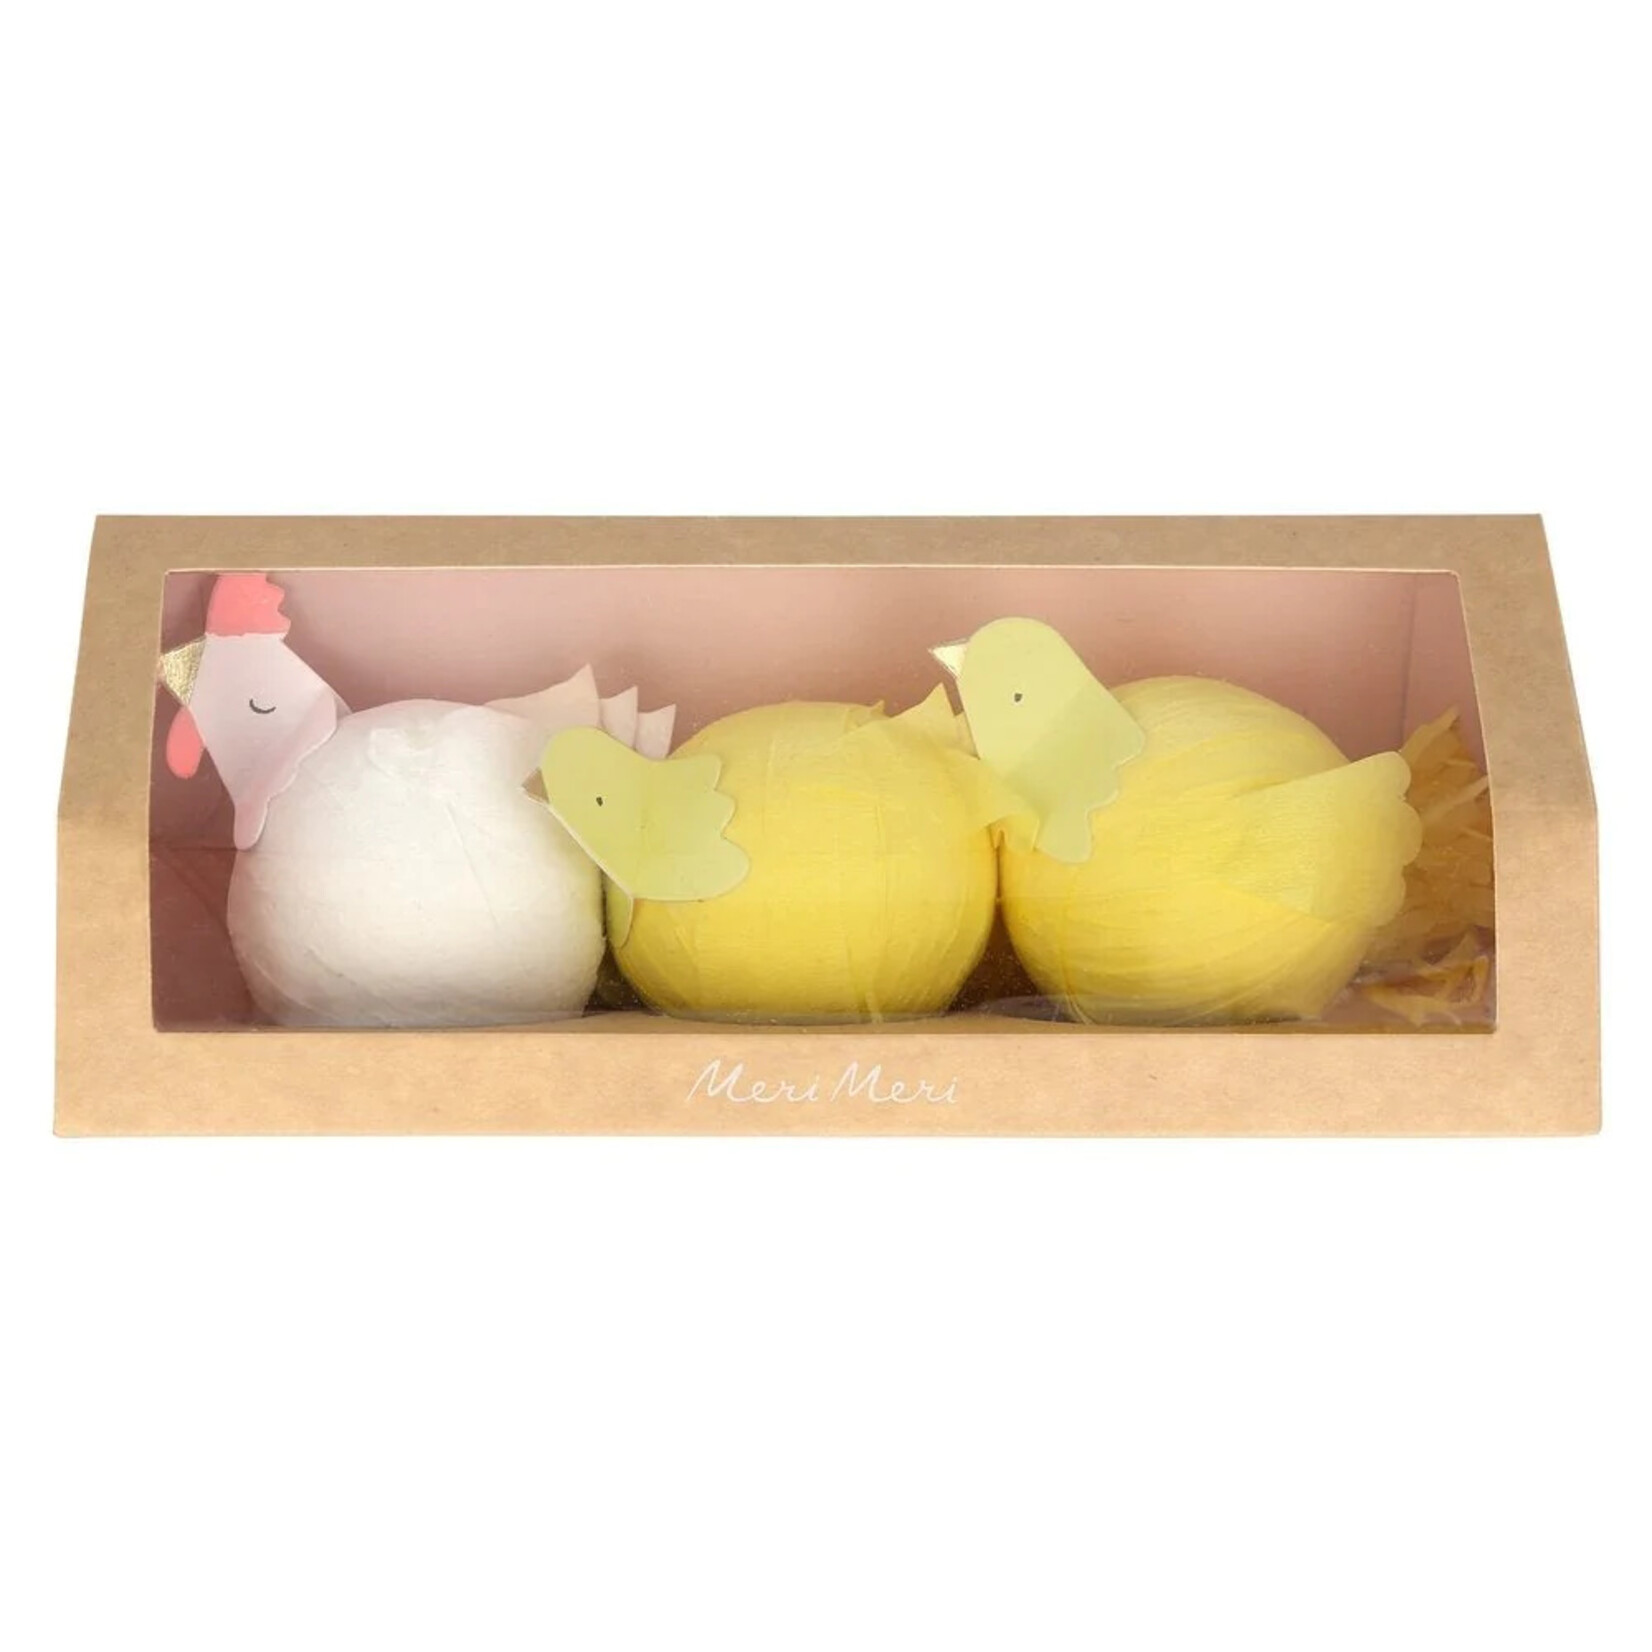 MERIMERI hen & chicks surprise balls